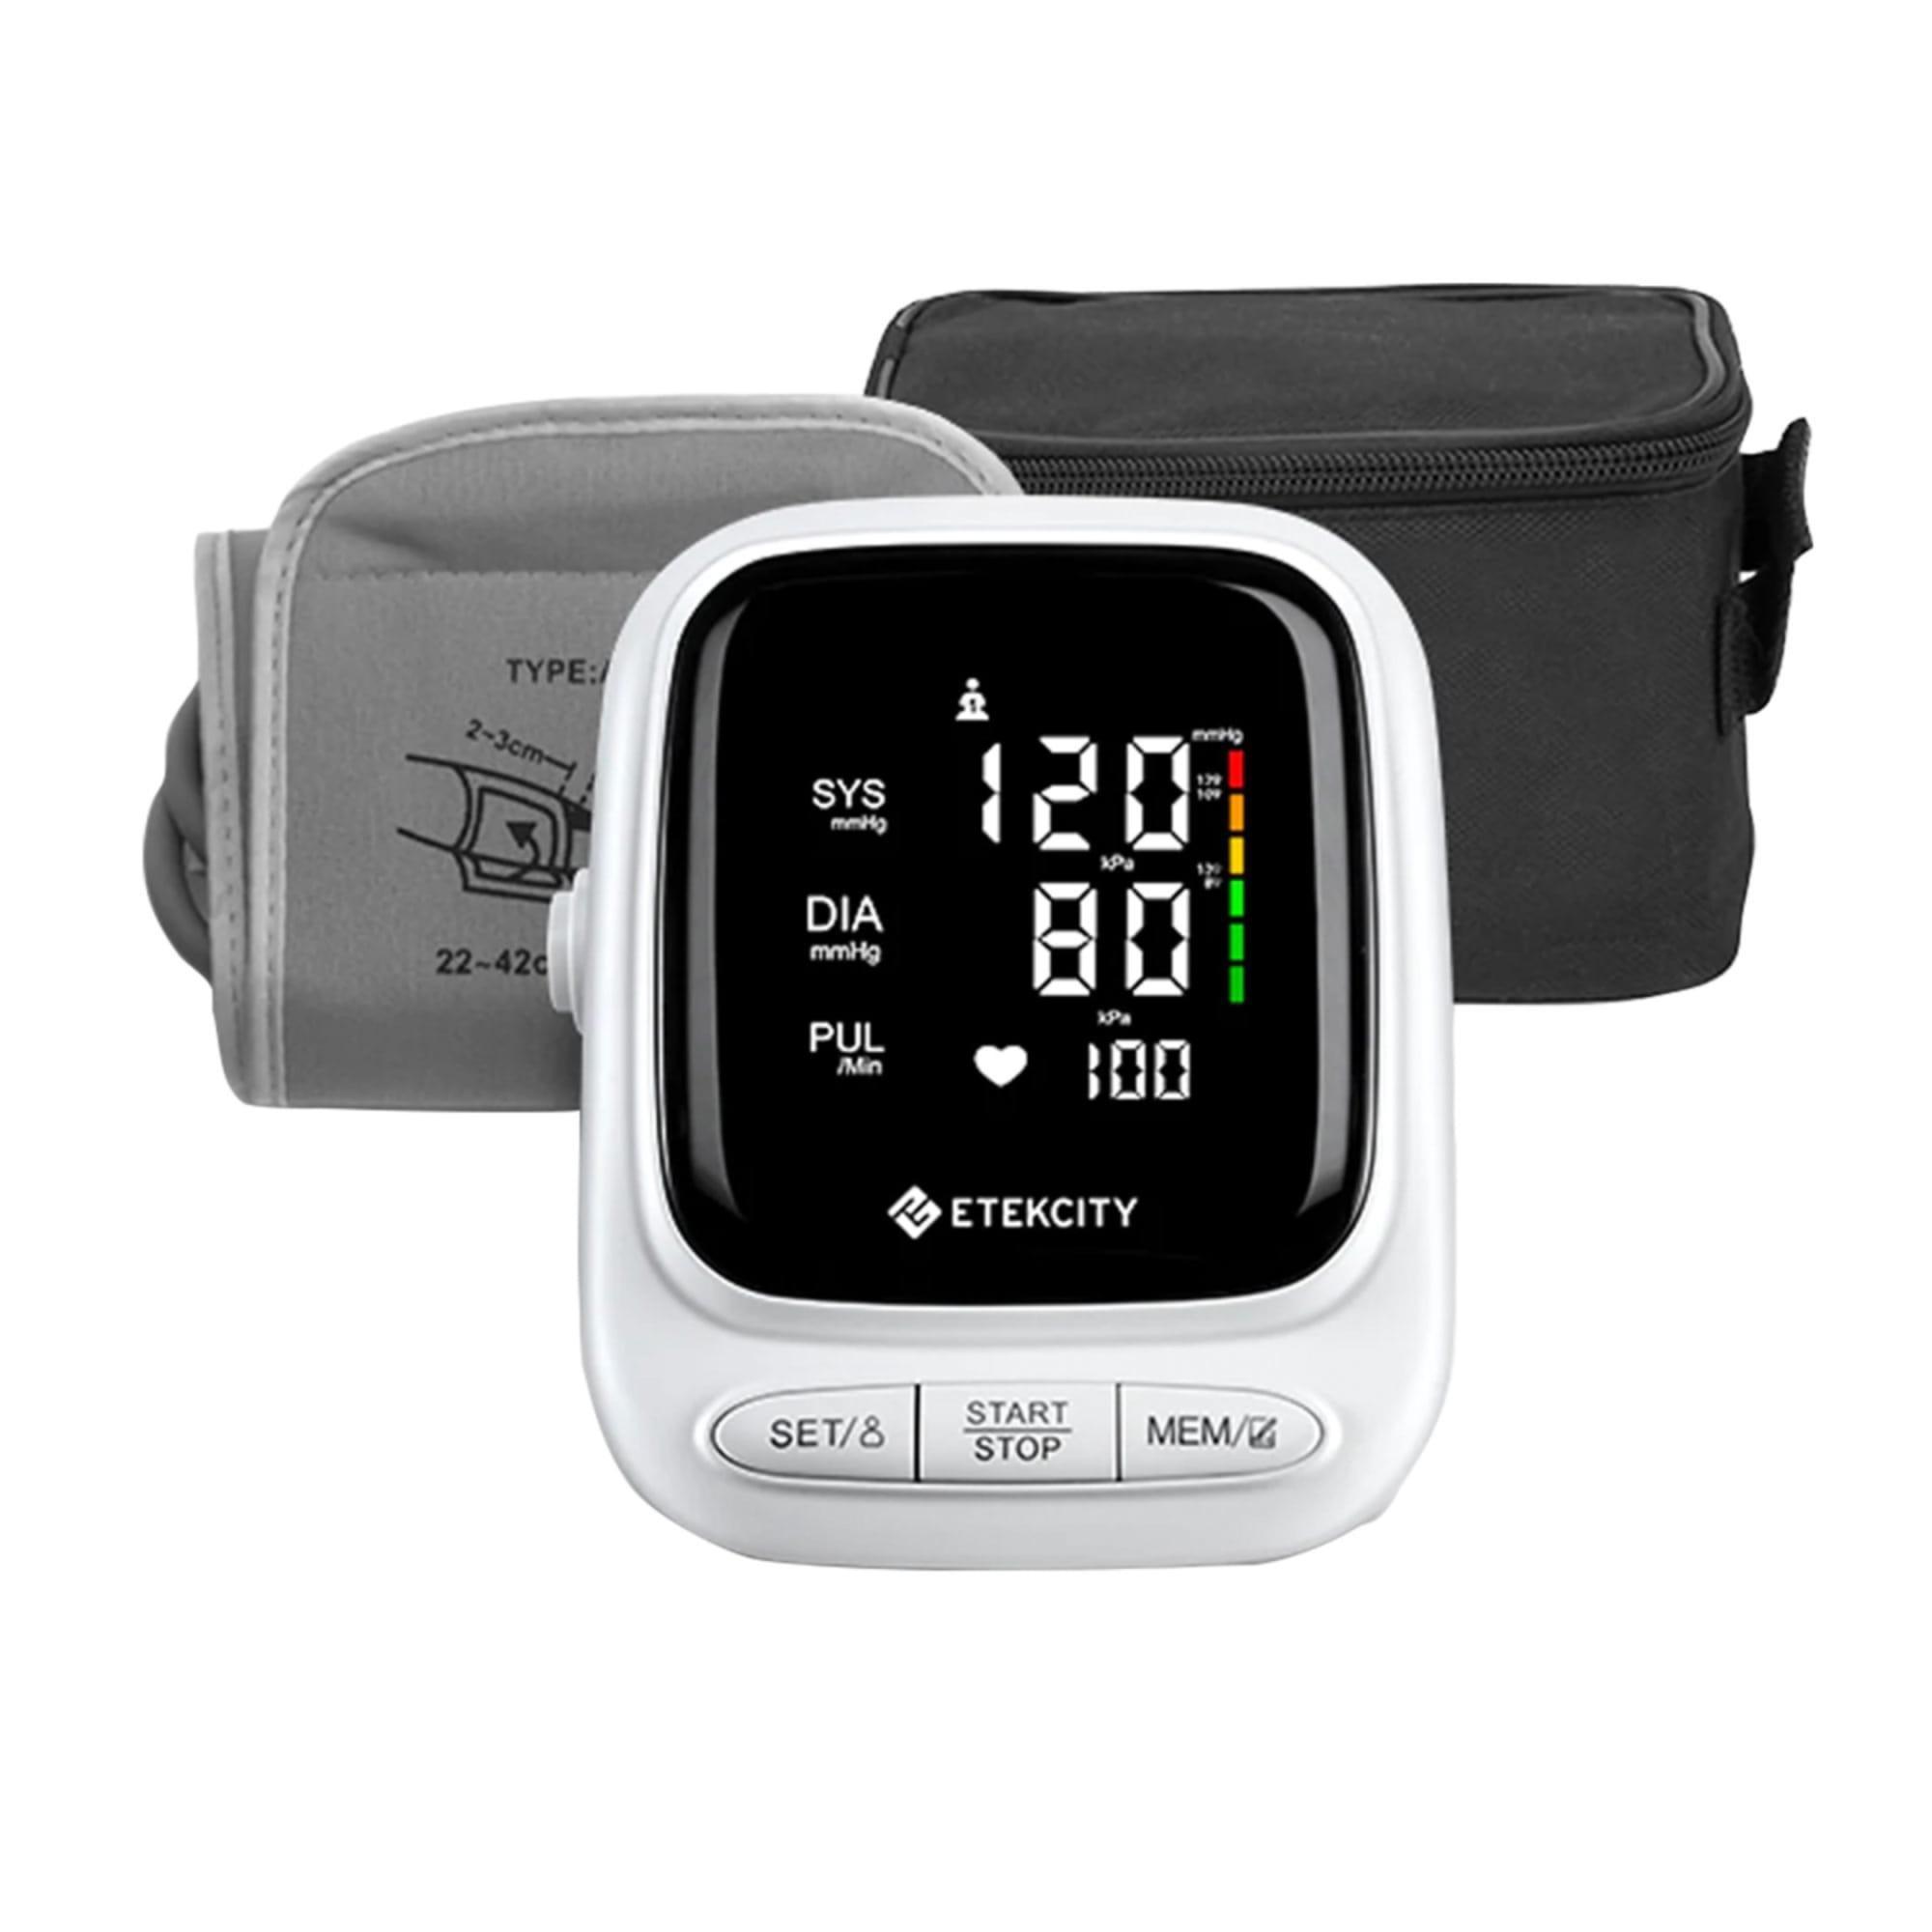 Etekcity Smart WiFi Body Weight Scale and Blood Pressure Monitor Bundle Black Image 3